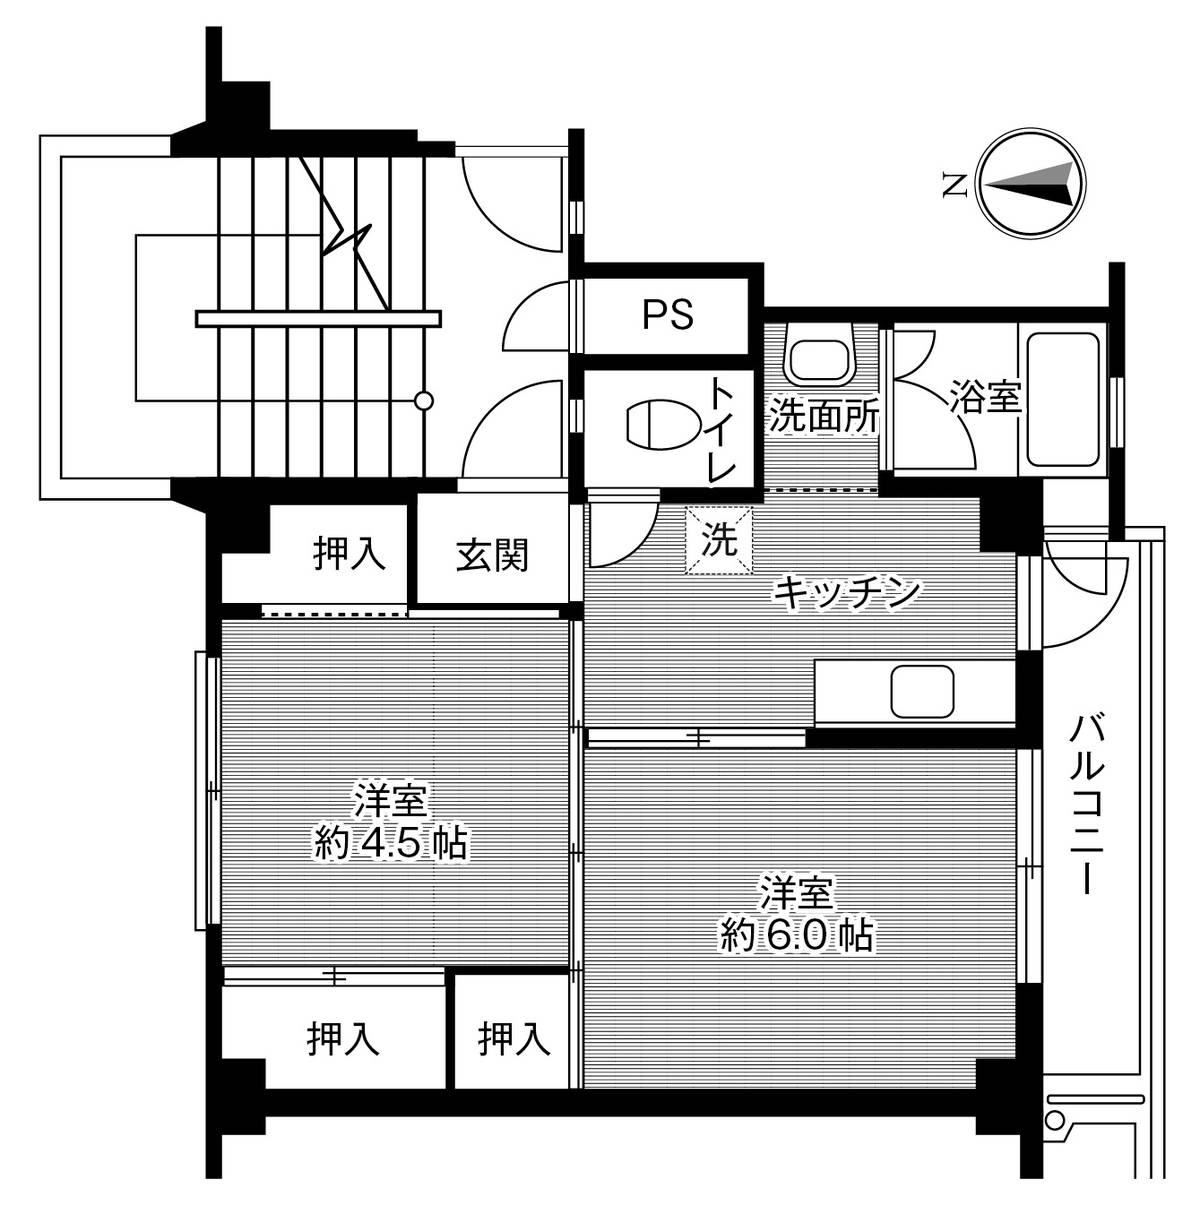 2K floorplan of Village House Kokubu in Imabari-shi